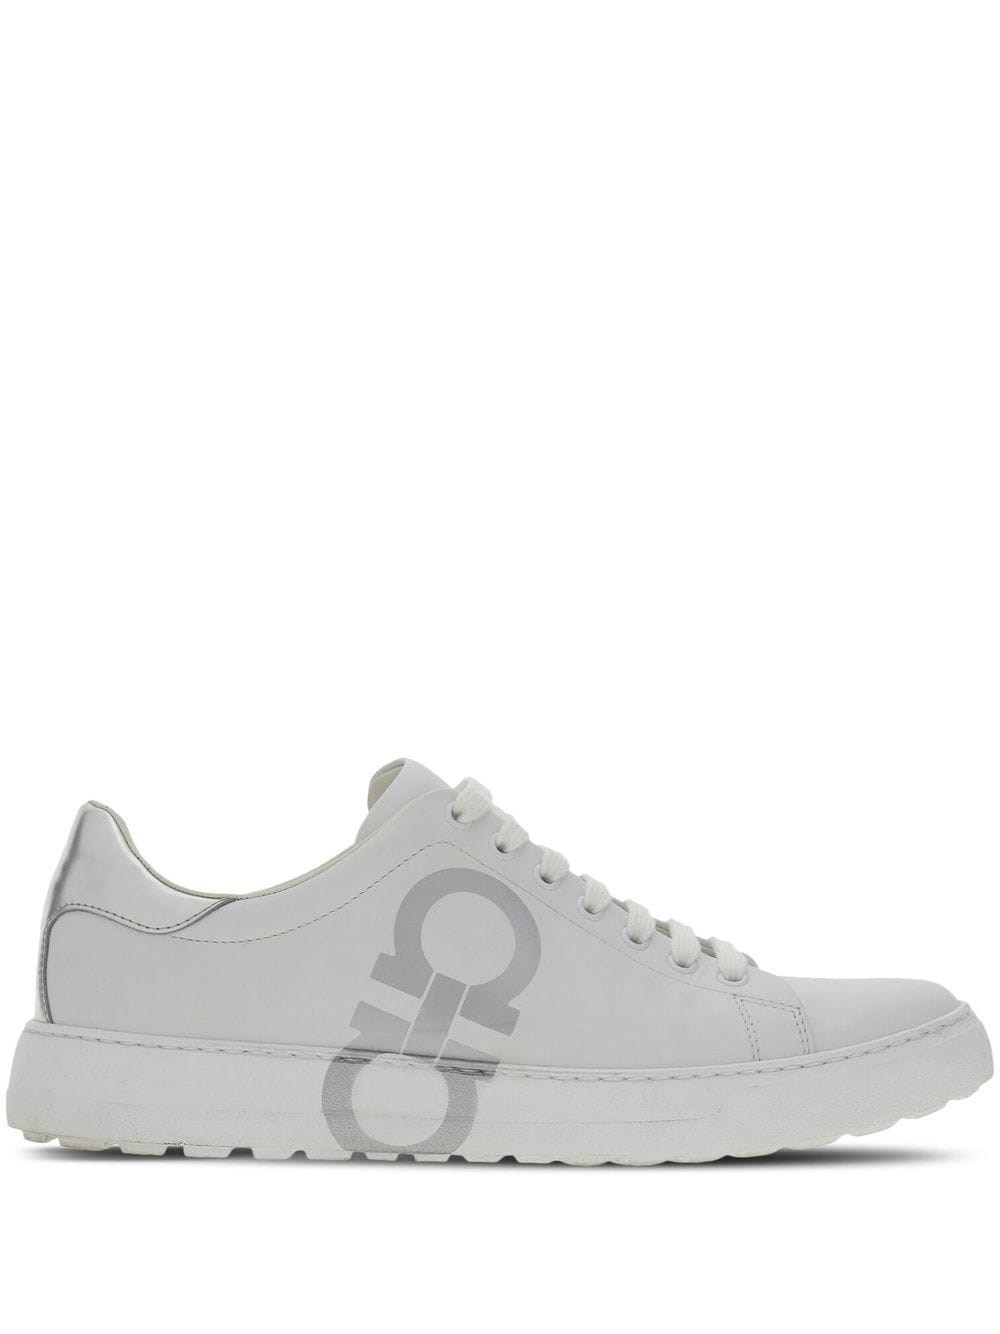 Ferragamo Number Sneakers In White